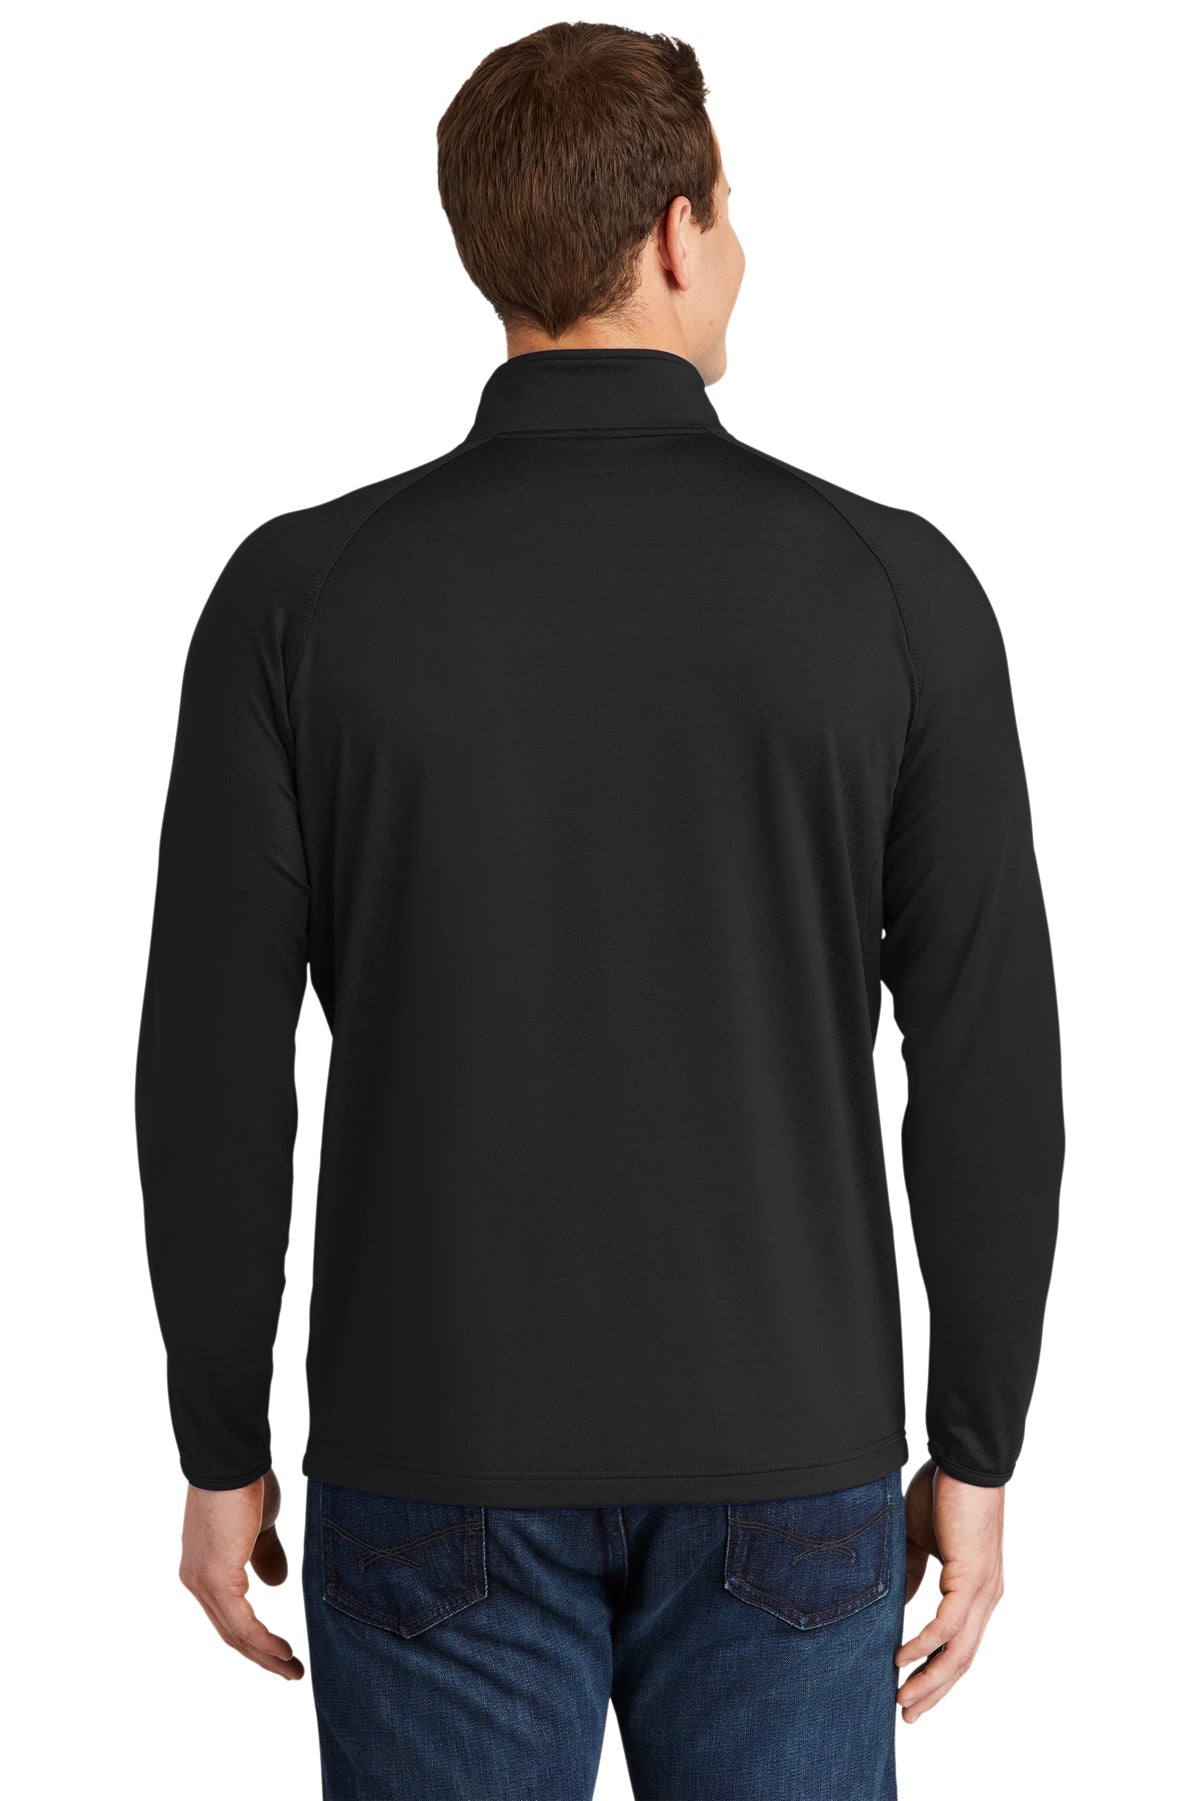 sport-tek_tst850 _black_company_logo_sweatshirts